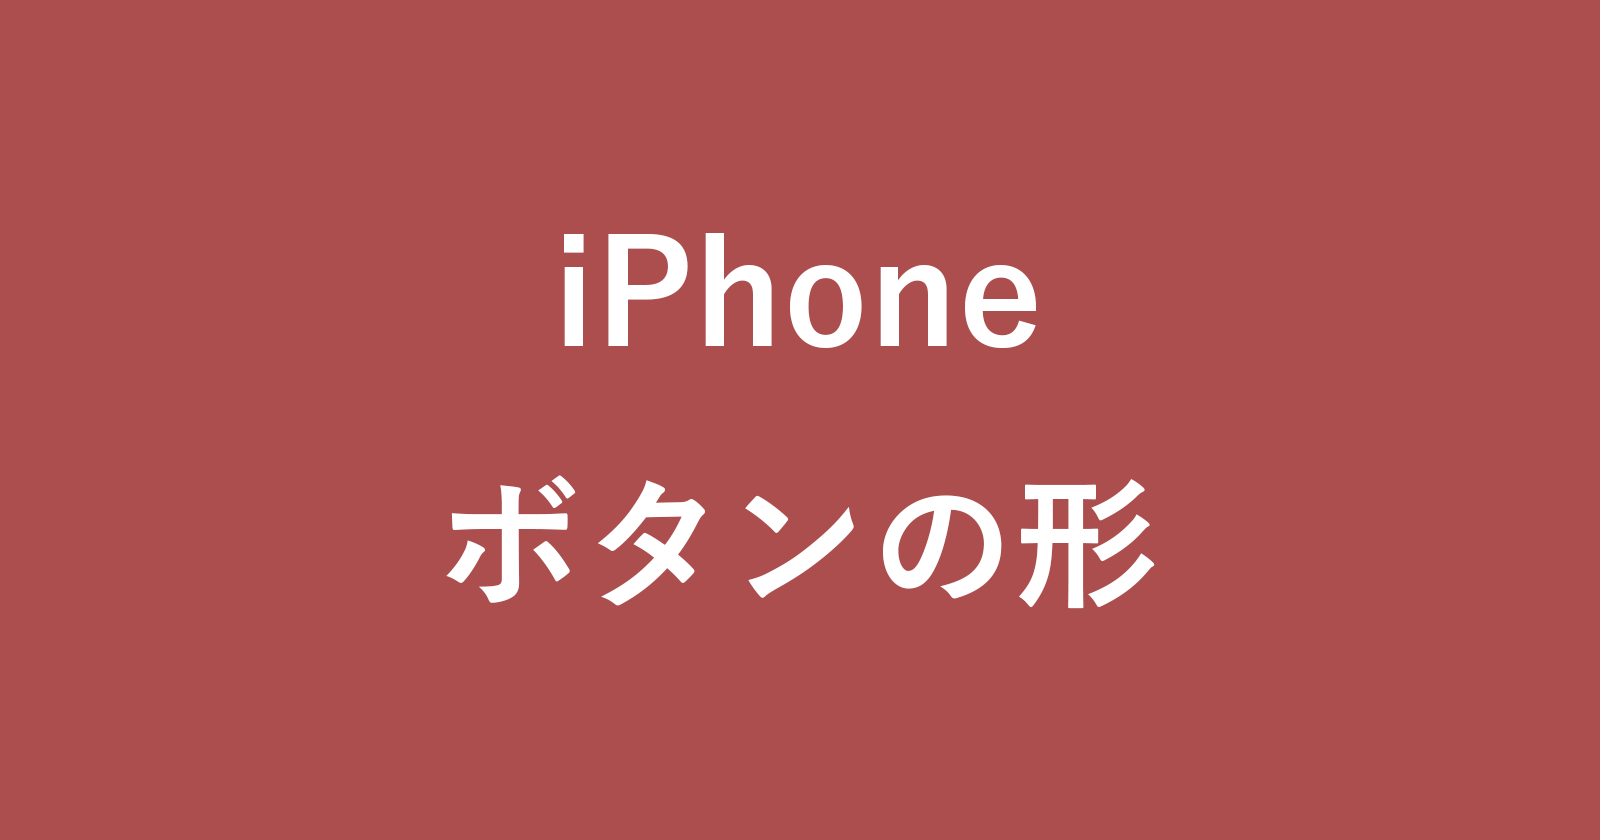 iphone button shape